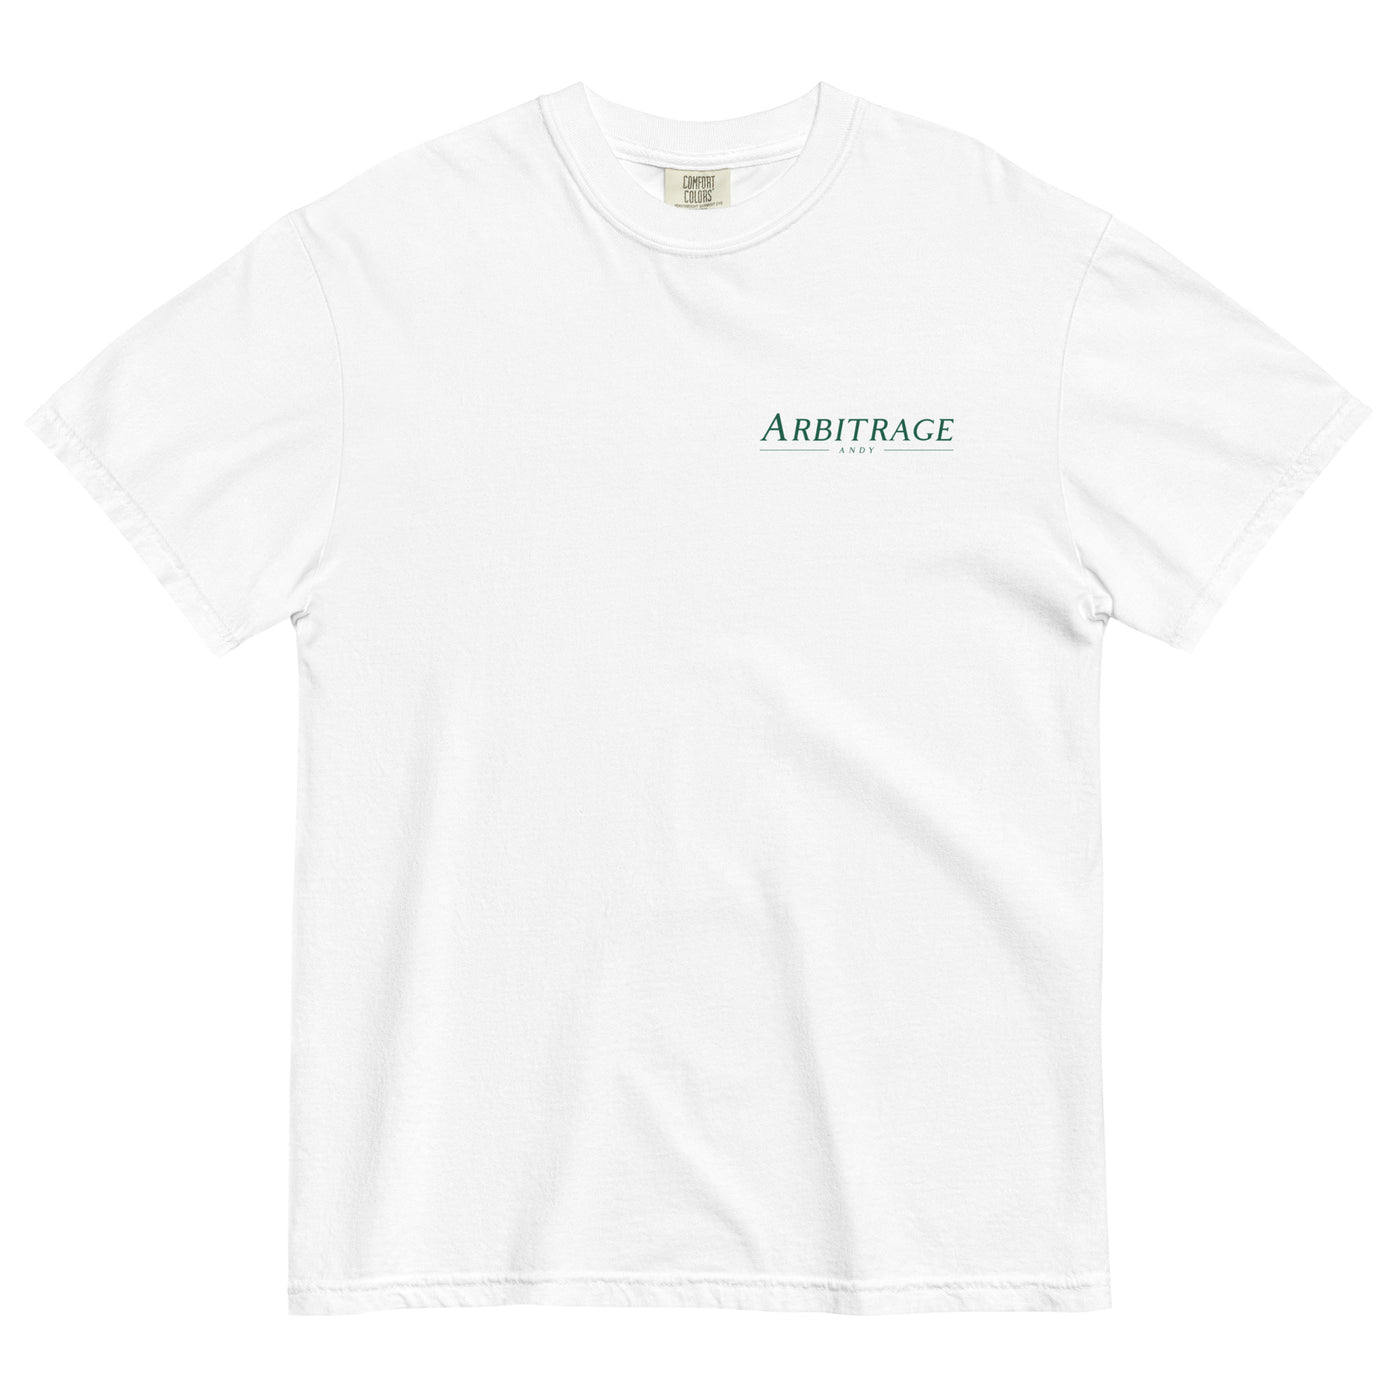 Arbitrage Andy Hamptons Summer T Shirt - Arbitrage Andy